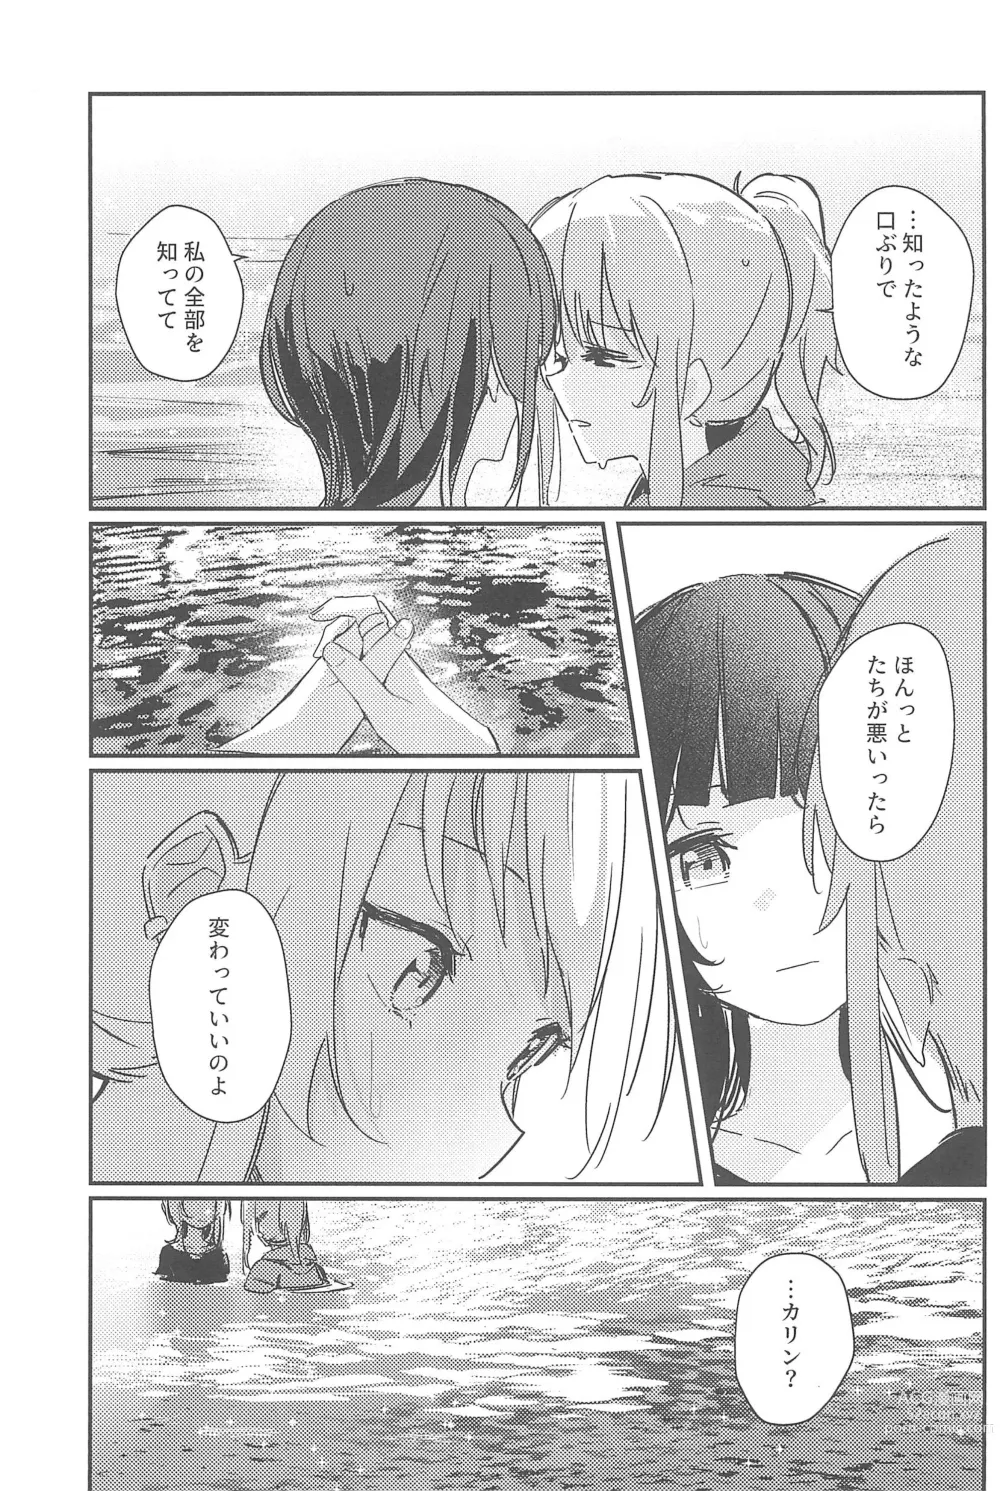 Page 25 of doujinshi MIRROR